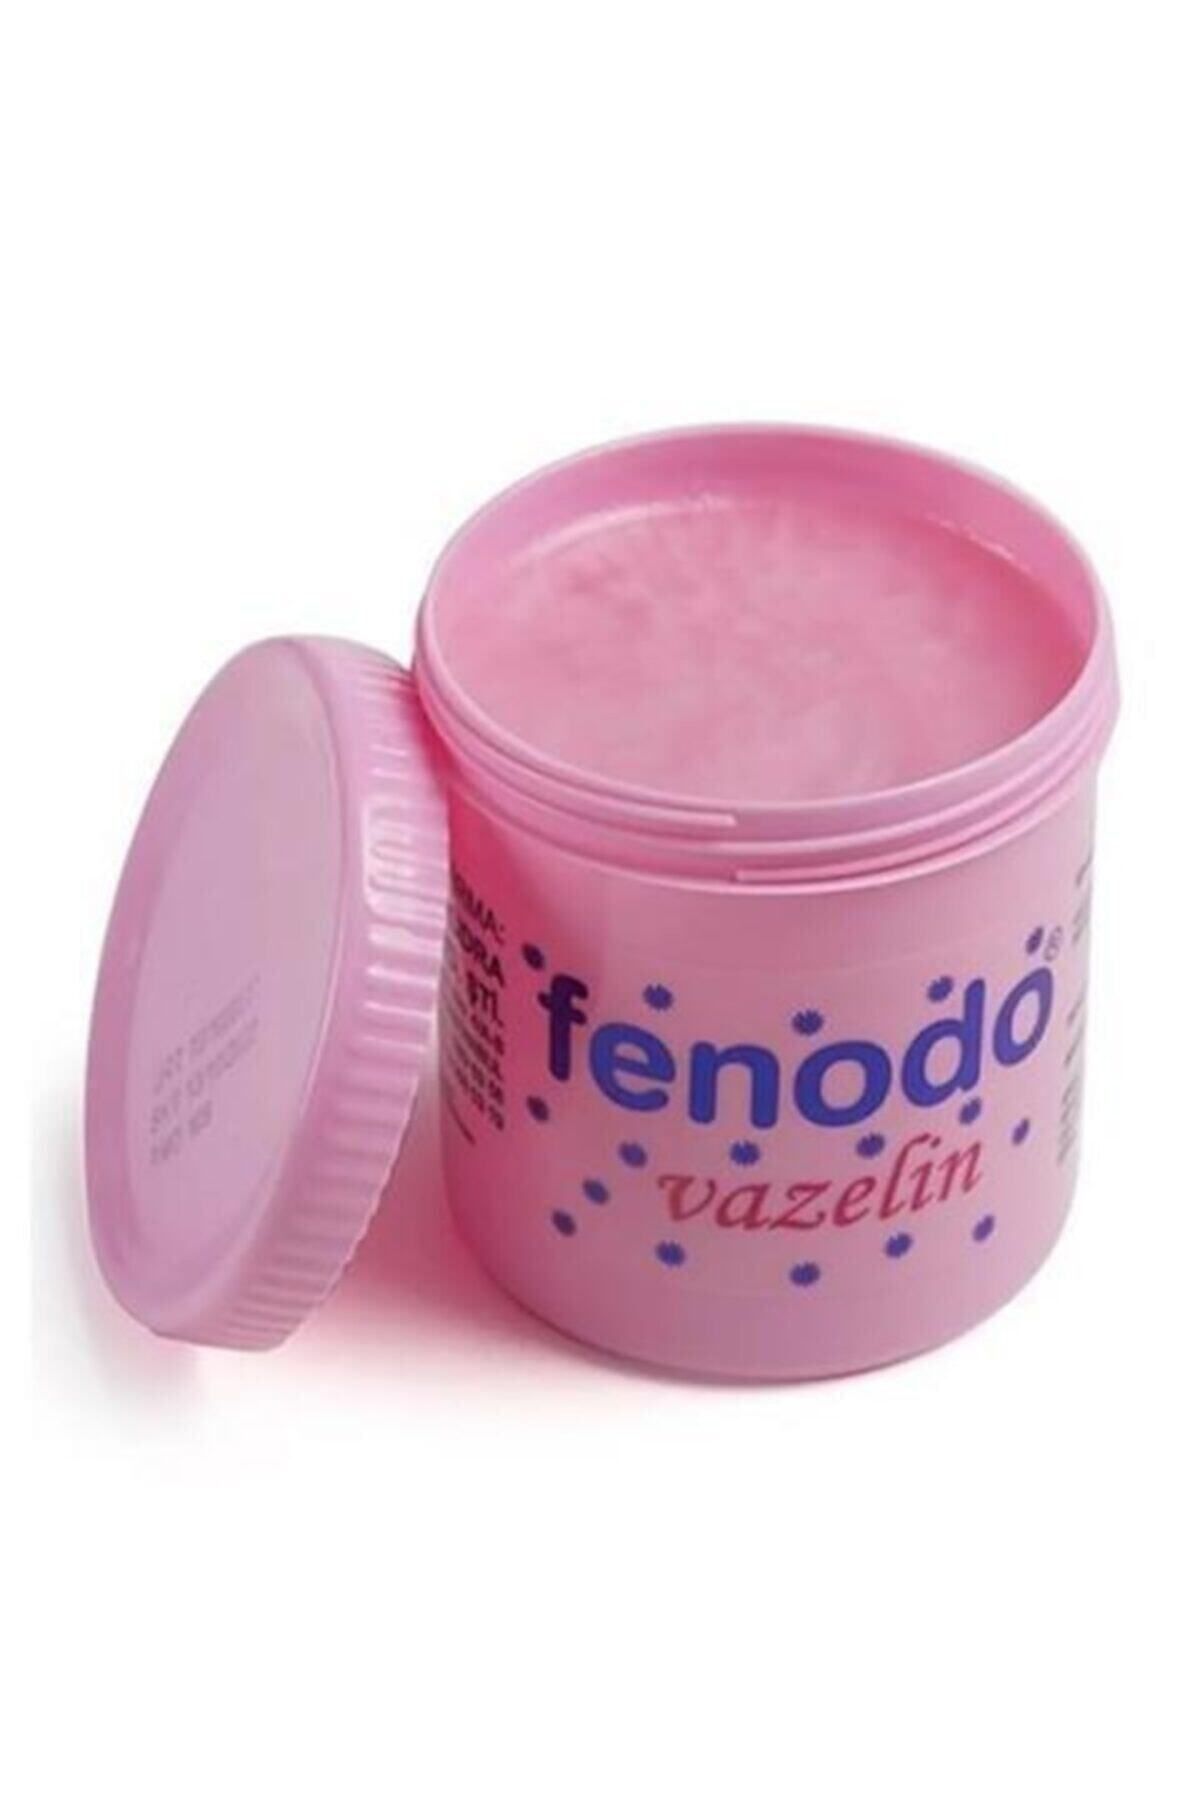 Fenodo Pembe Vazelin 150 ml